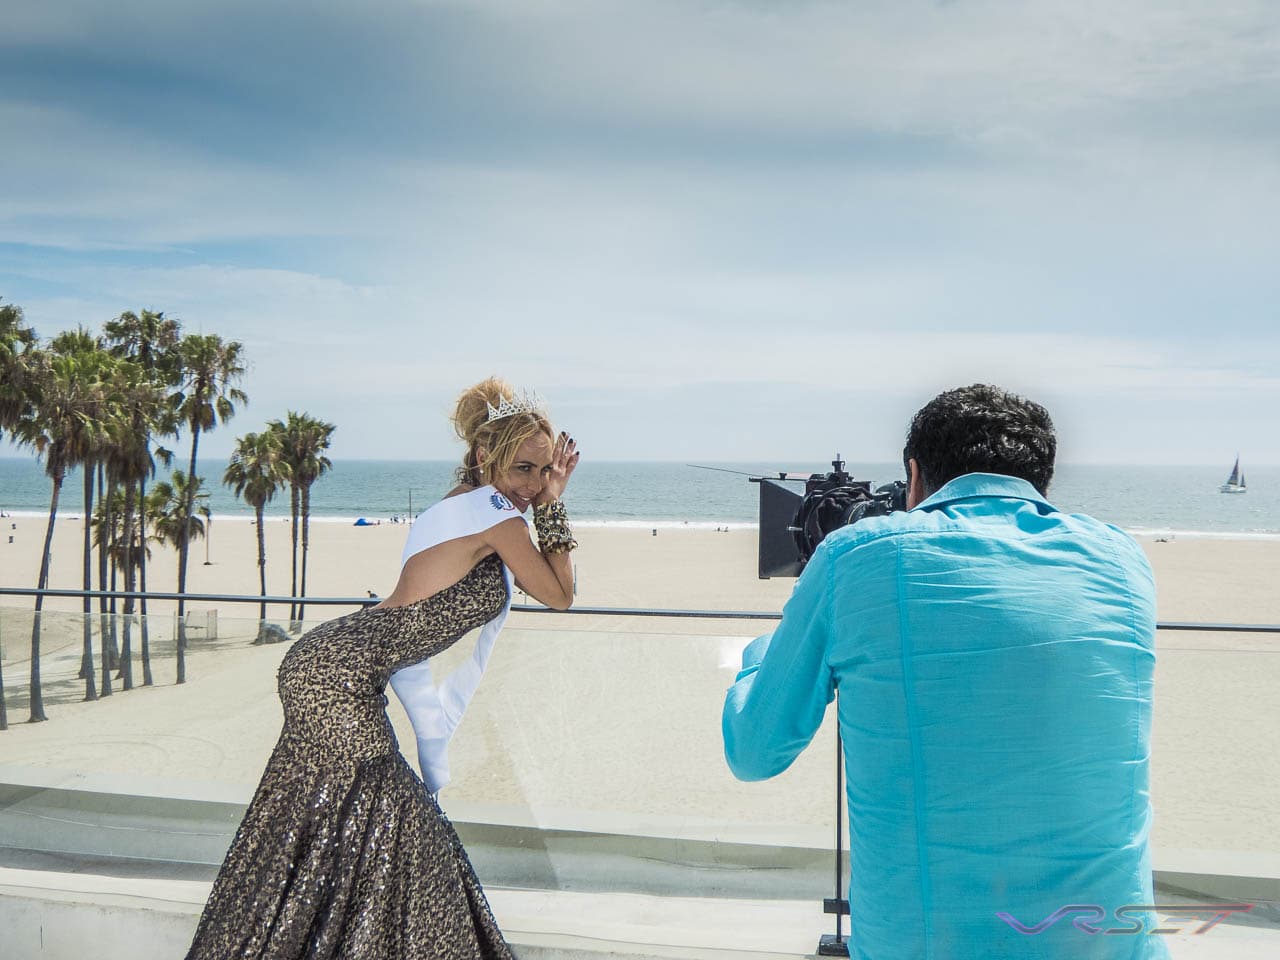 Camille Wood Behind Scene Venice Beach Orange County LA Fashion Photographer